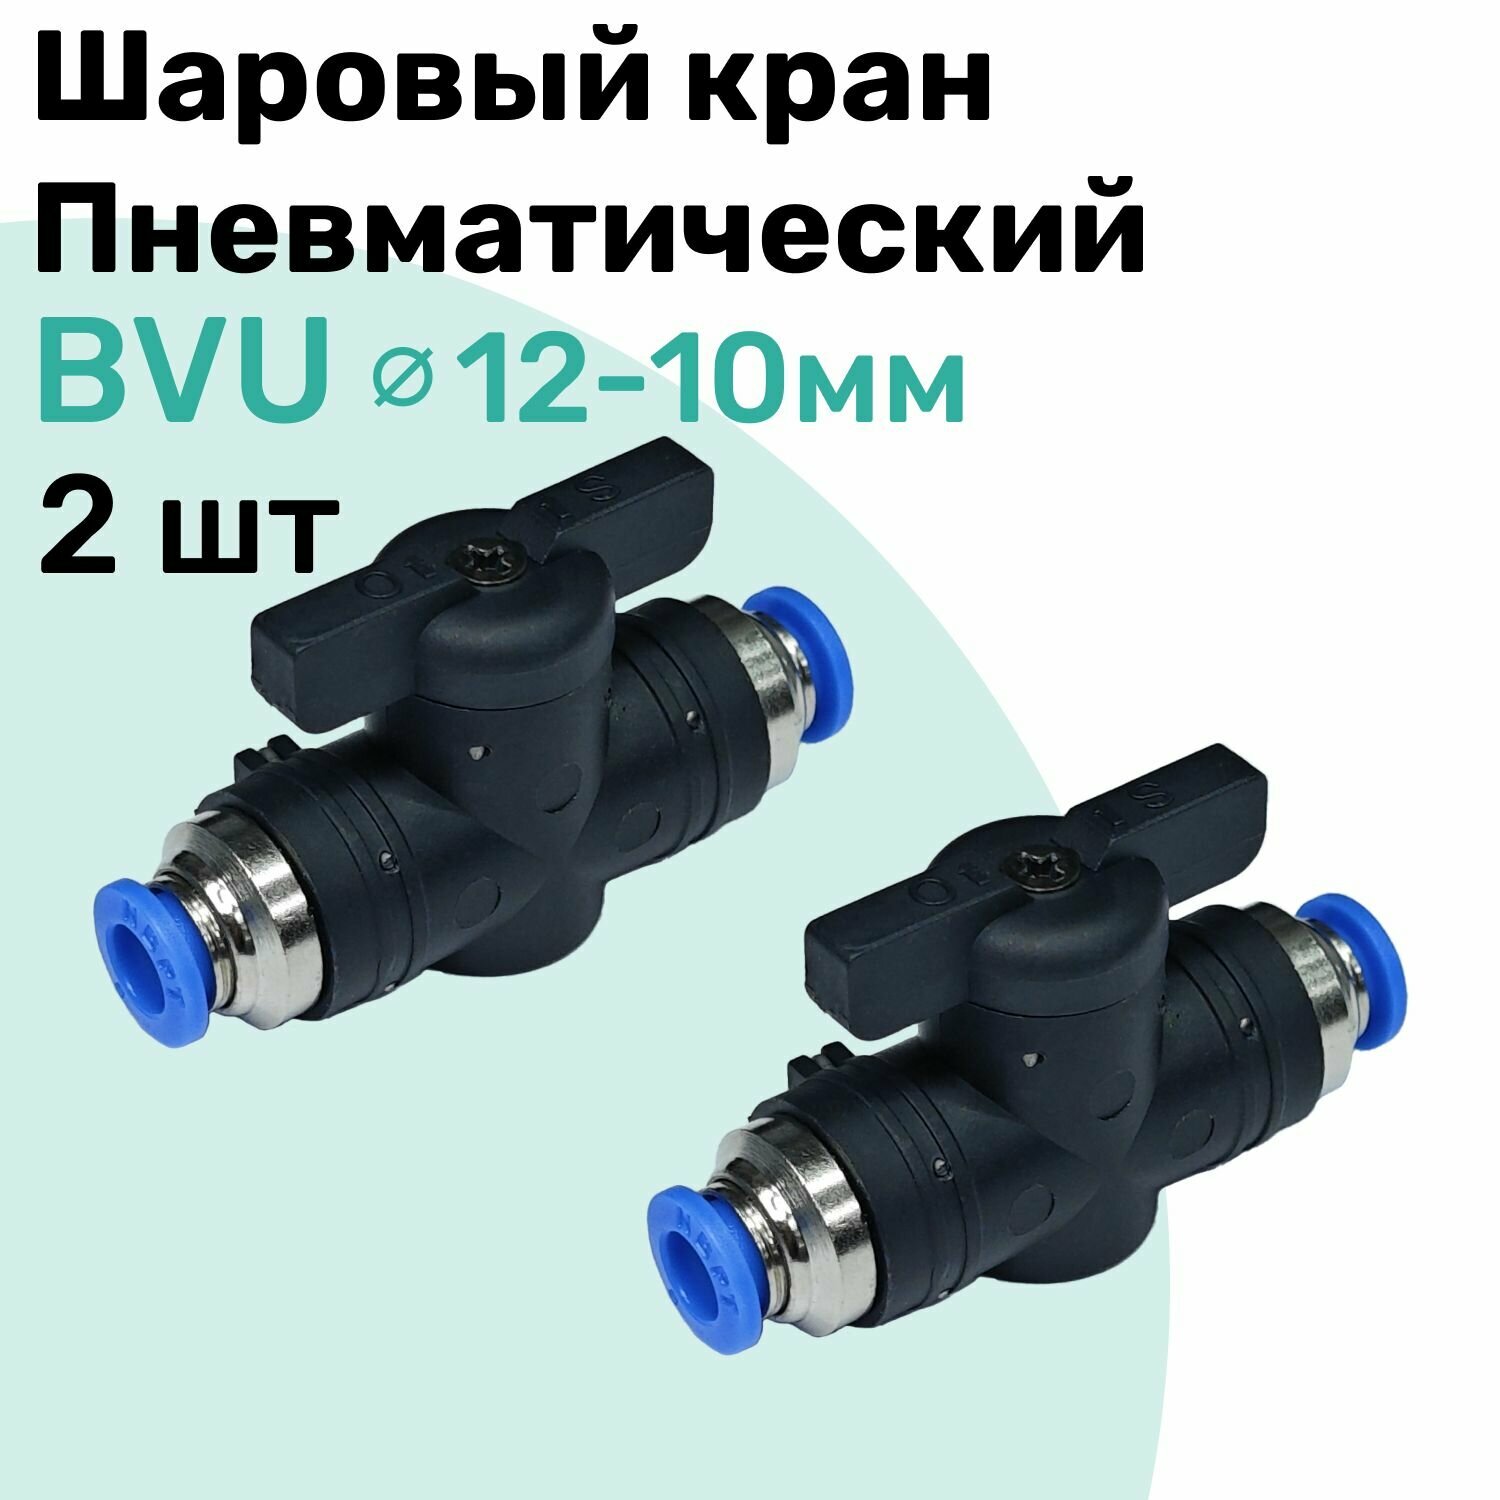 Шаровый кран пневматический BVU 12-10 мм, Пневмофитинг NBPT, Набор 2шт